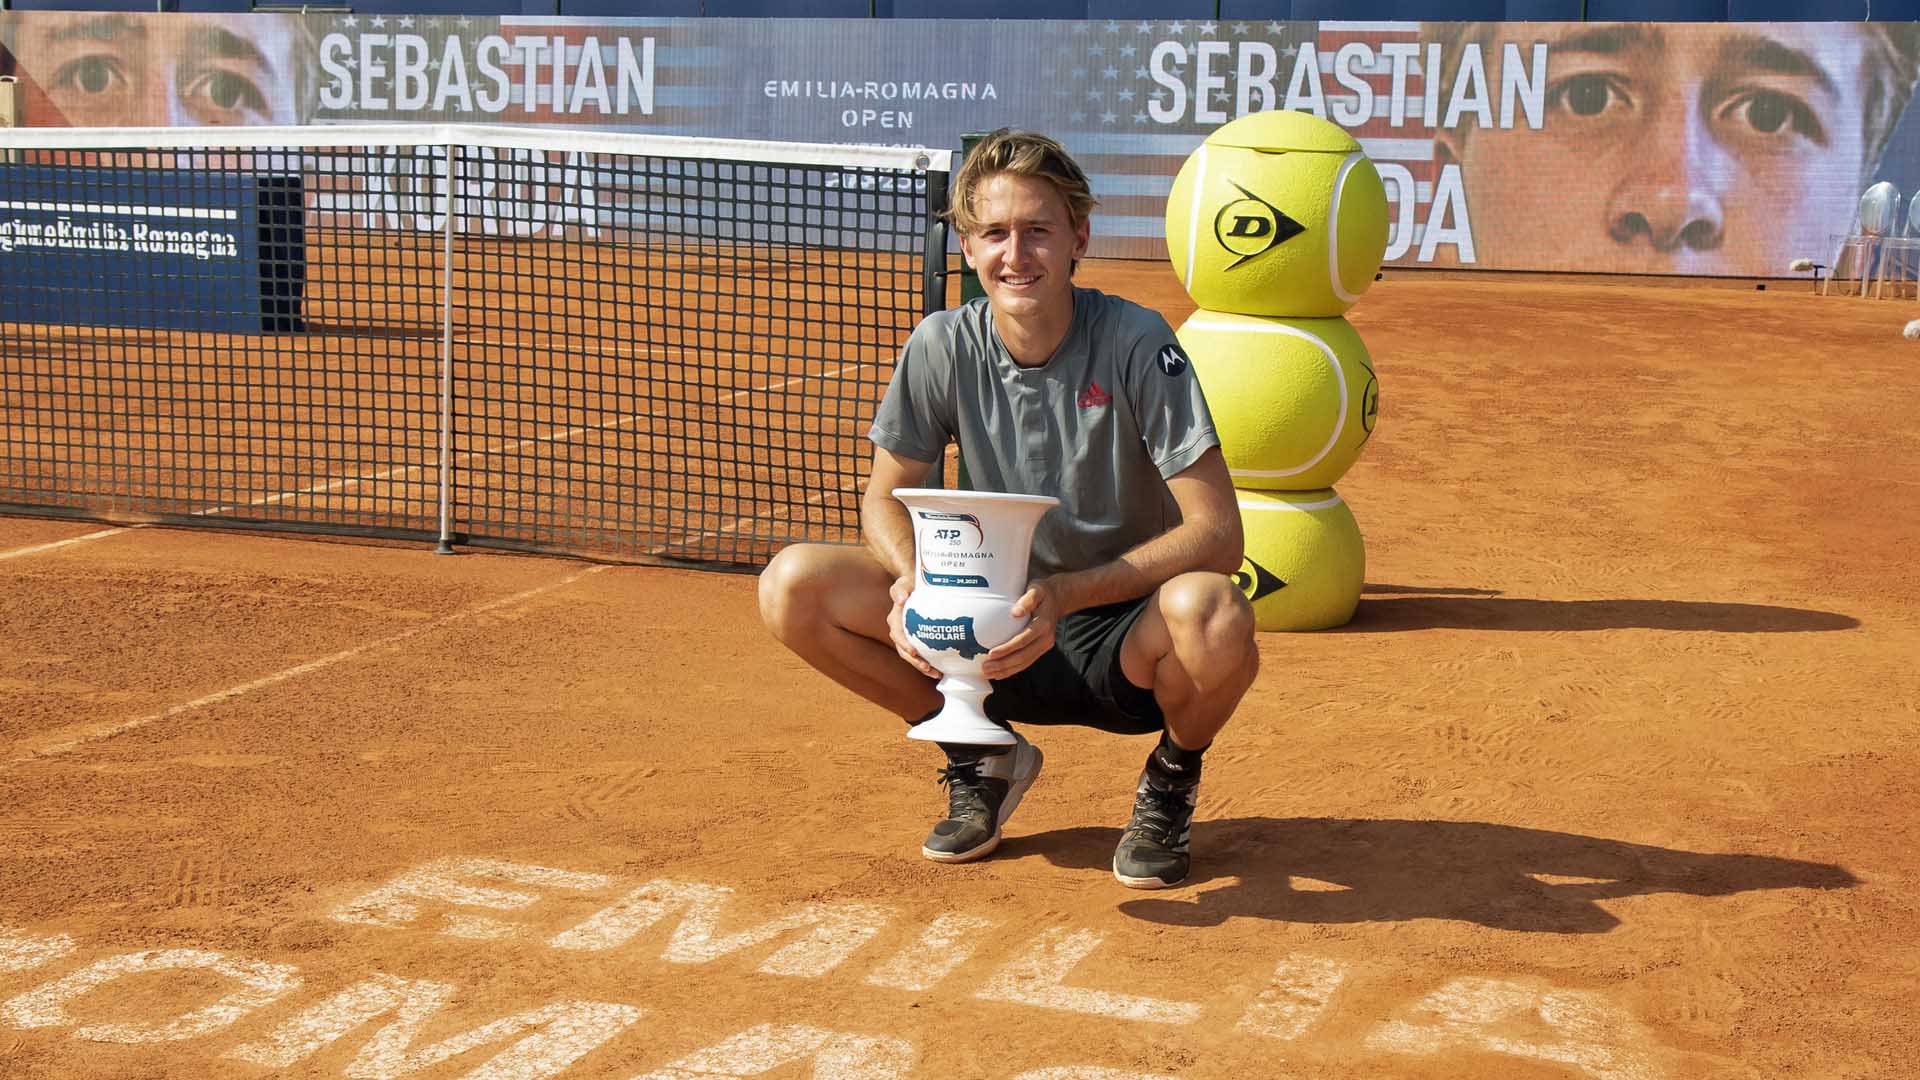 NextGenATP Sebastian Korda Claims First Title In Parma ATP Tour Tennis